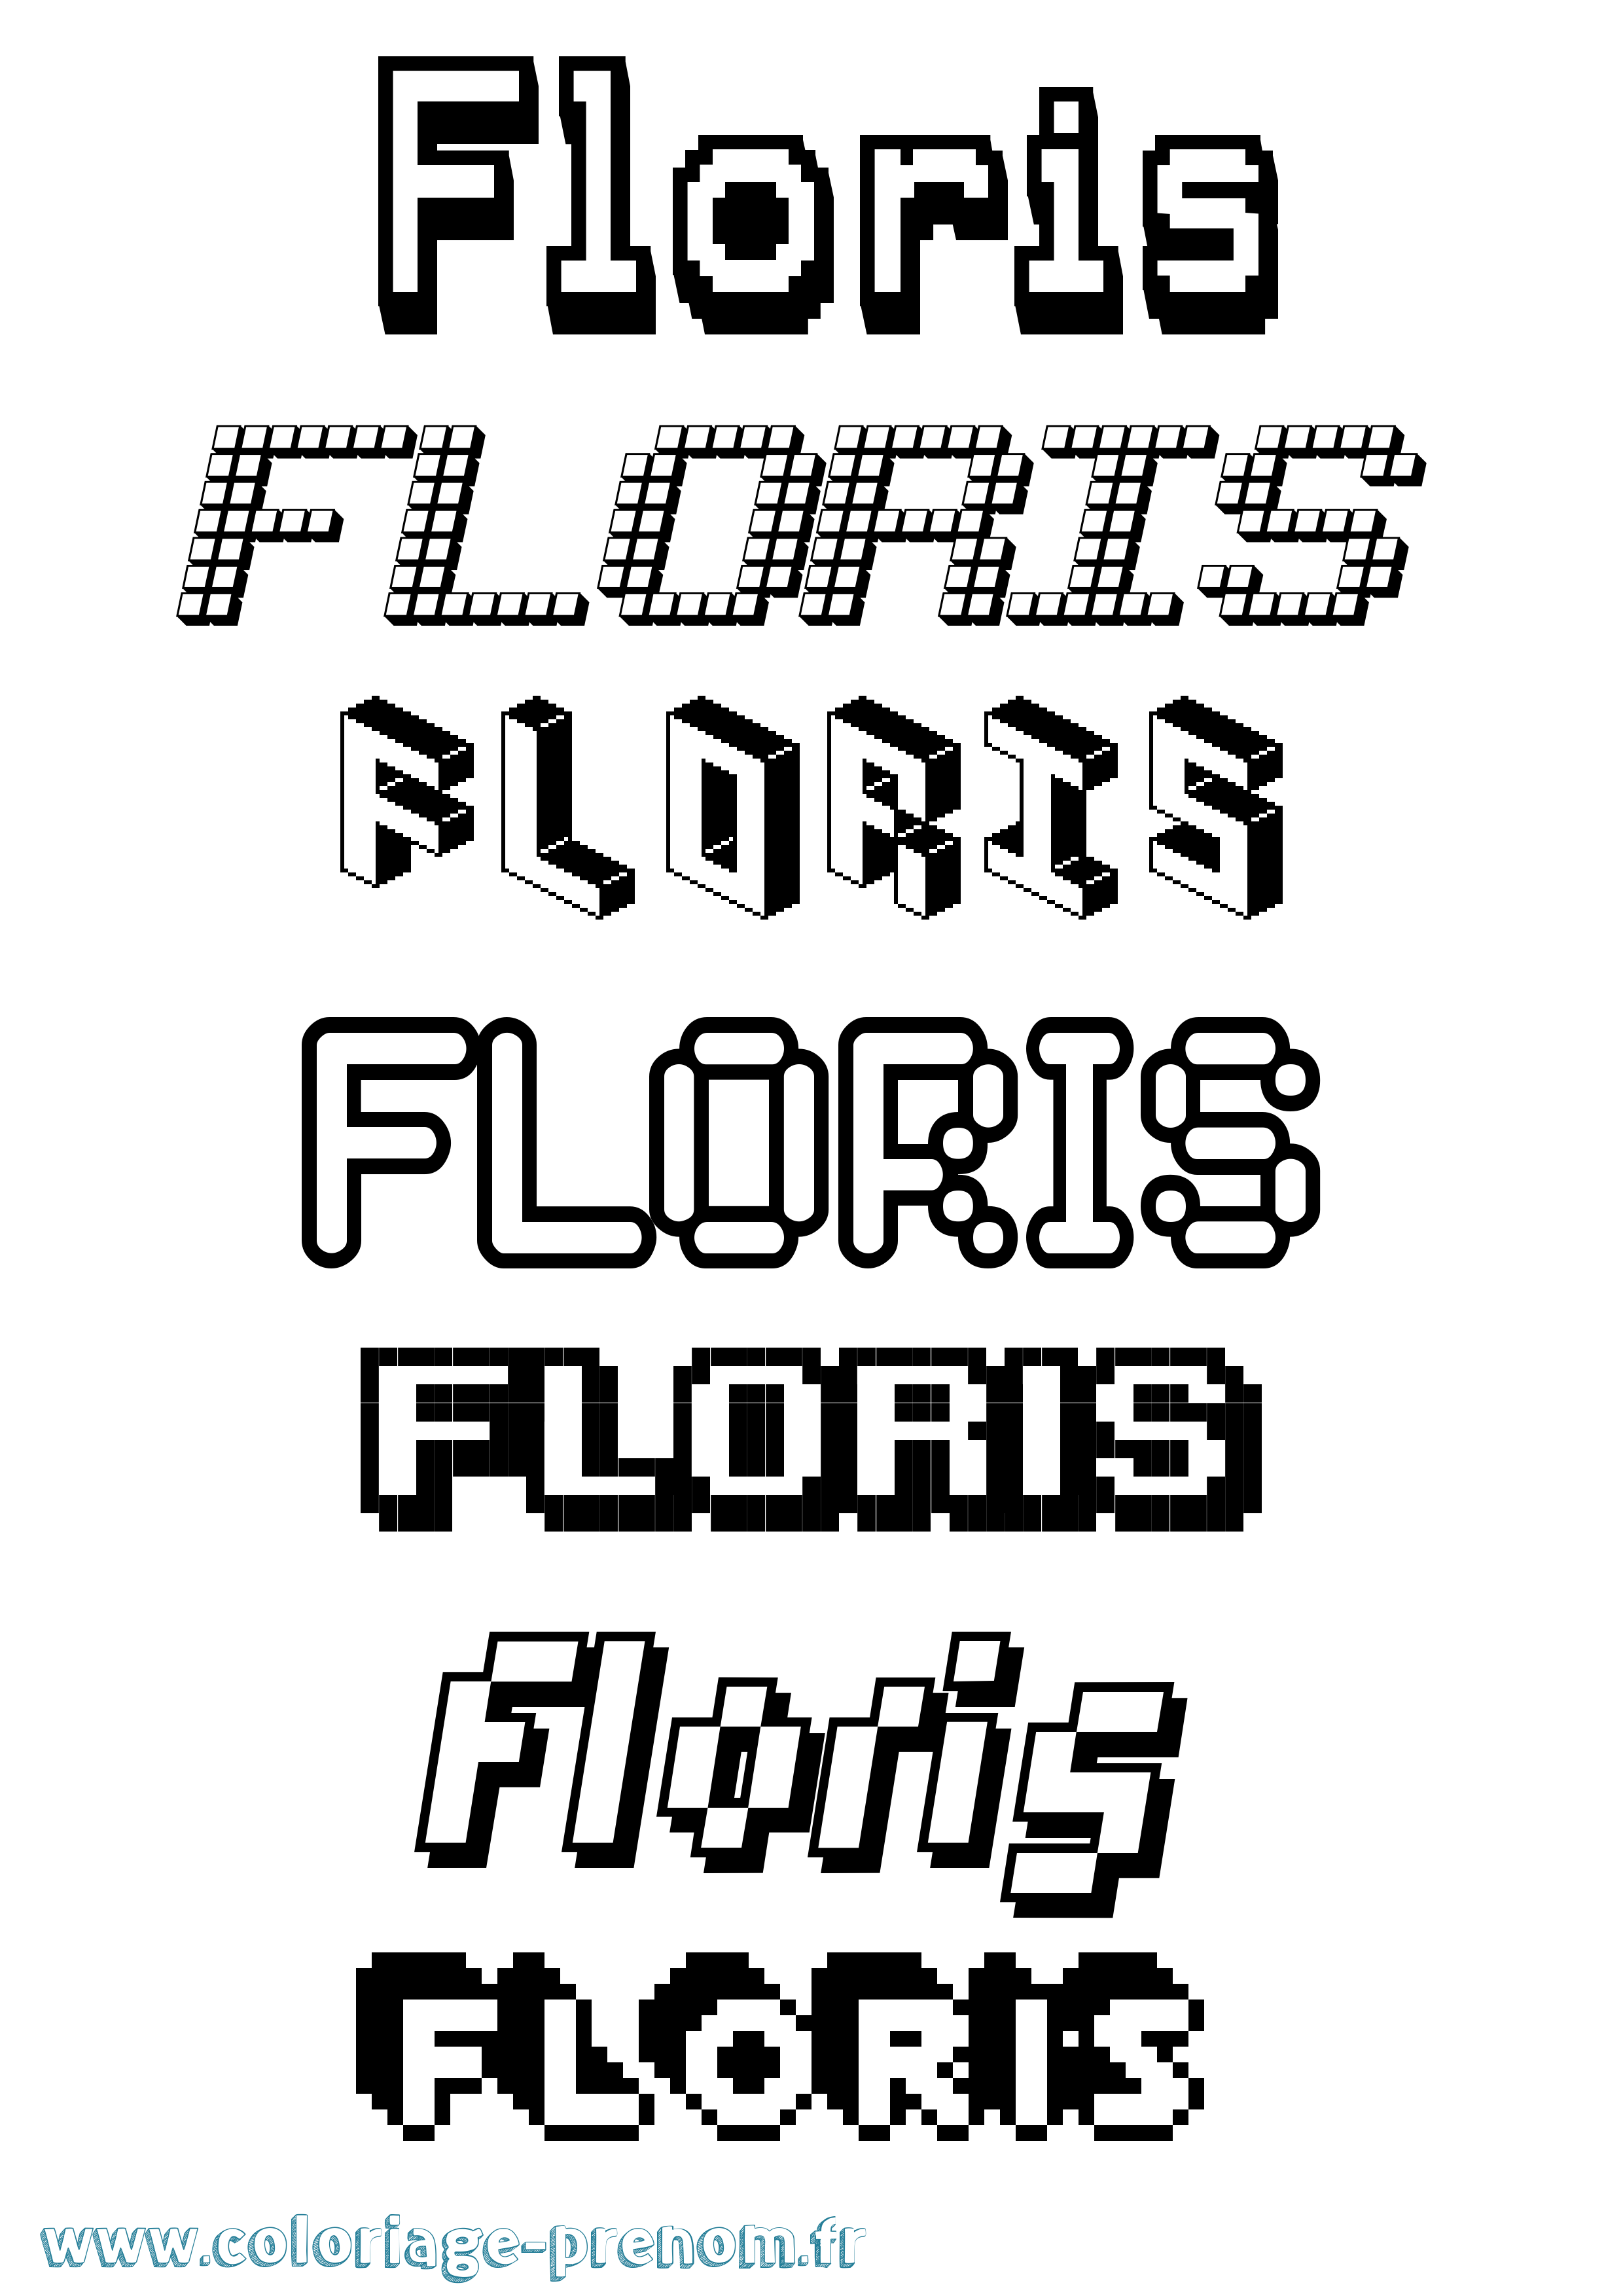 Coloriage prénom Floris Pixel